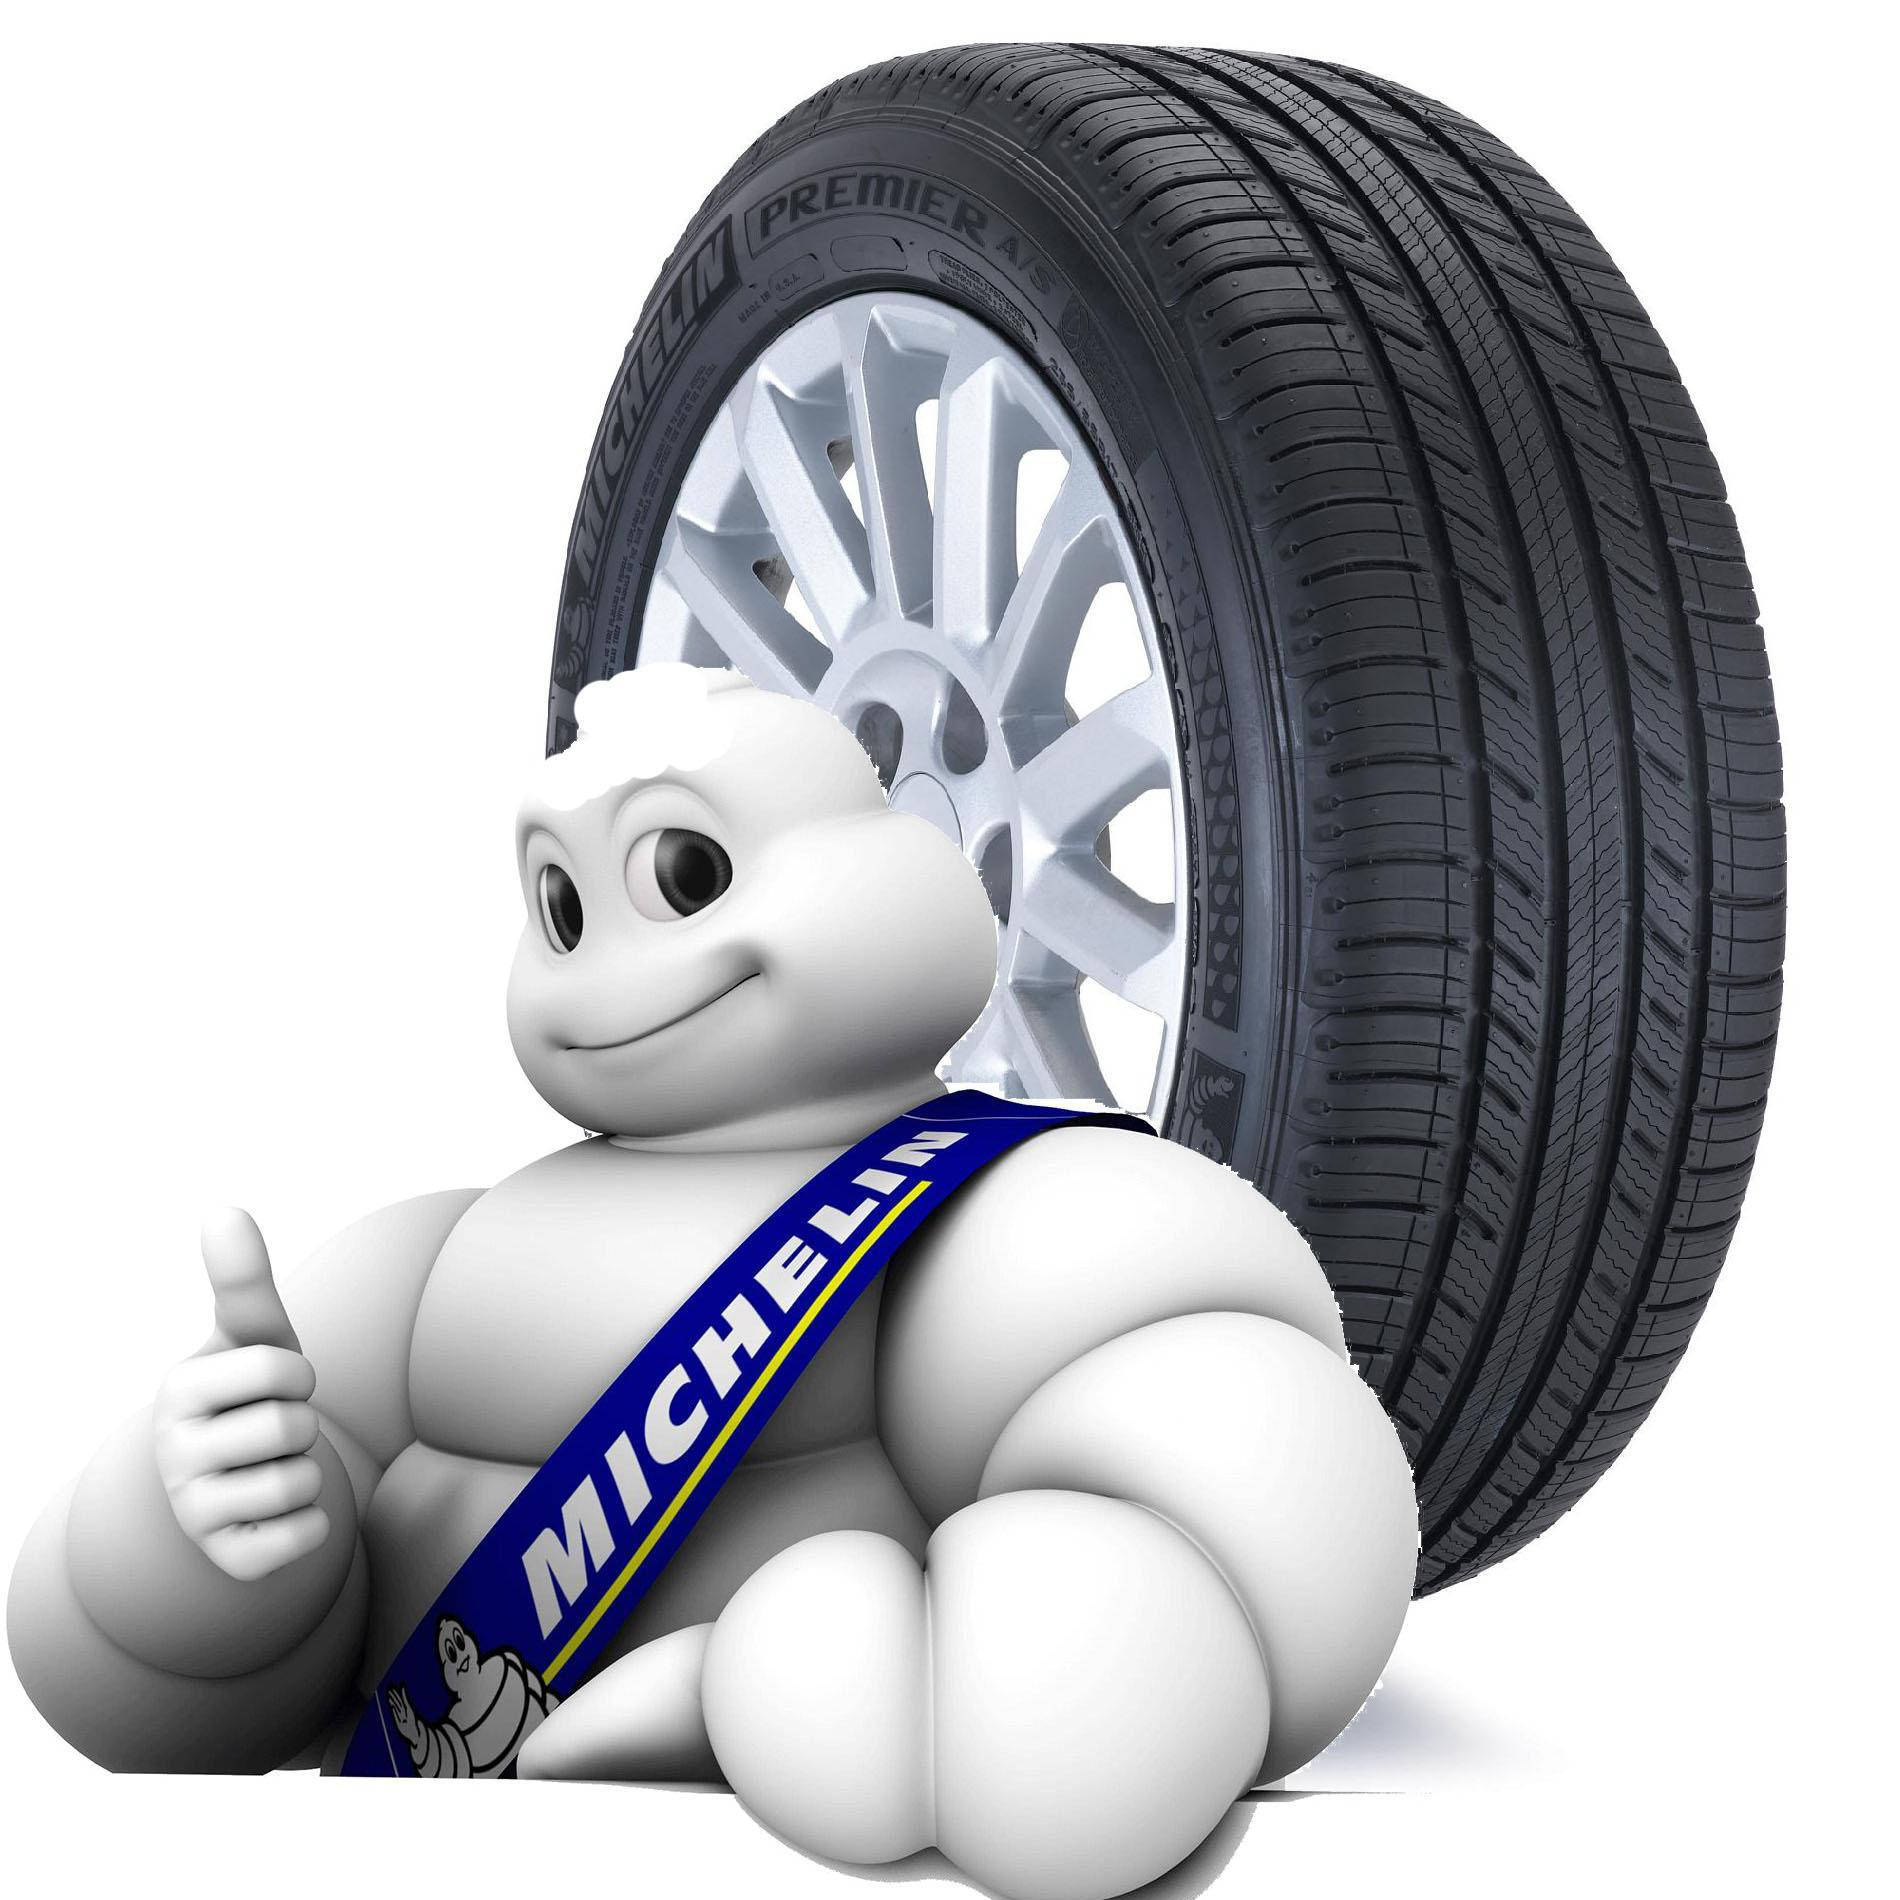 Michelinmarshmallow Tire Man - Michelin Marshmallow Däckmannen Wallpaper